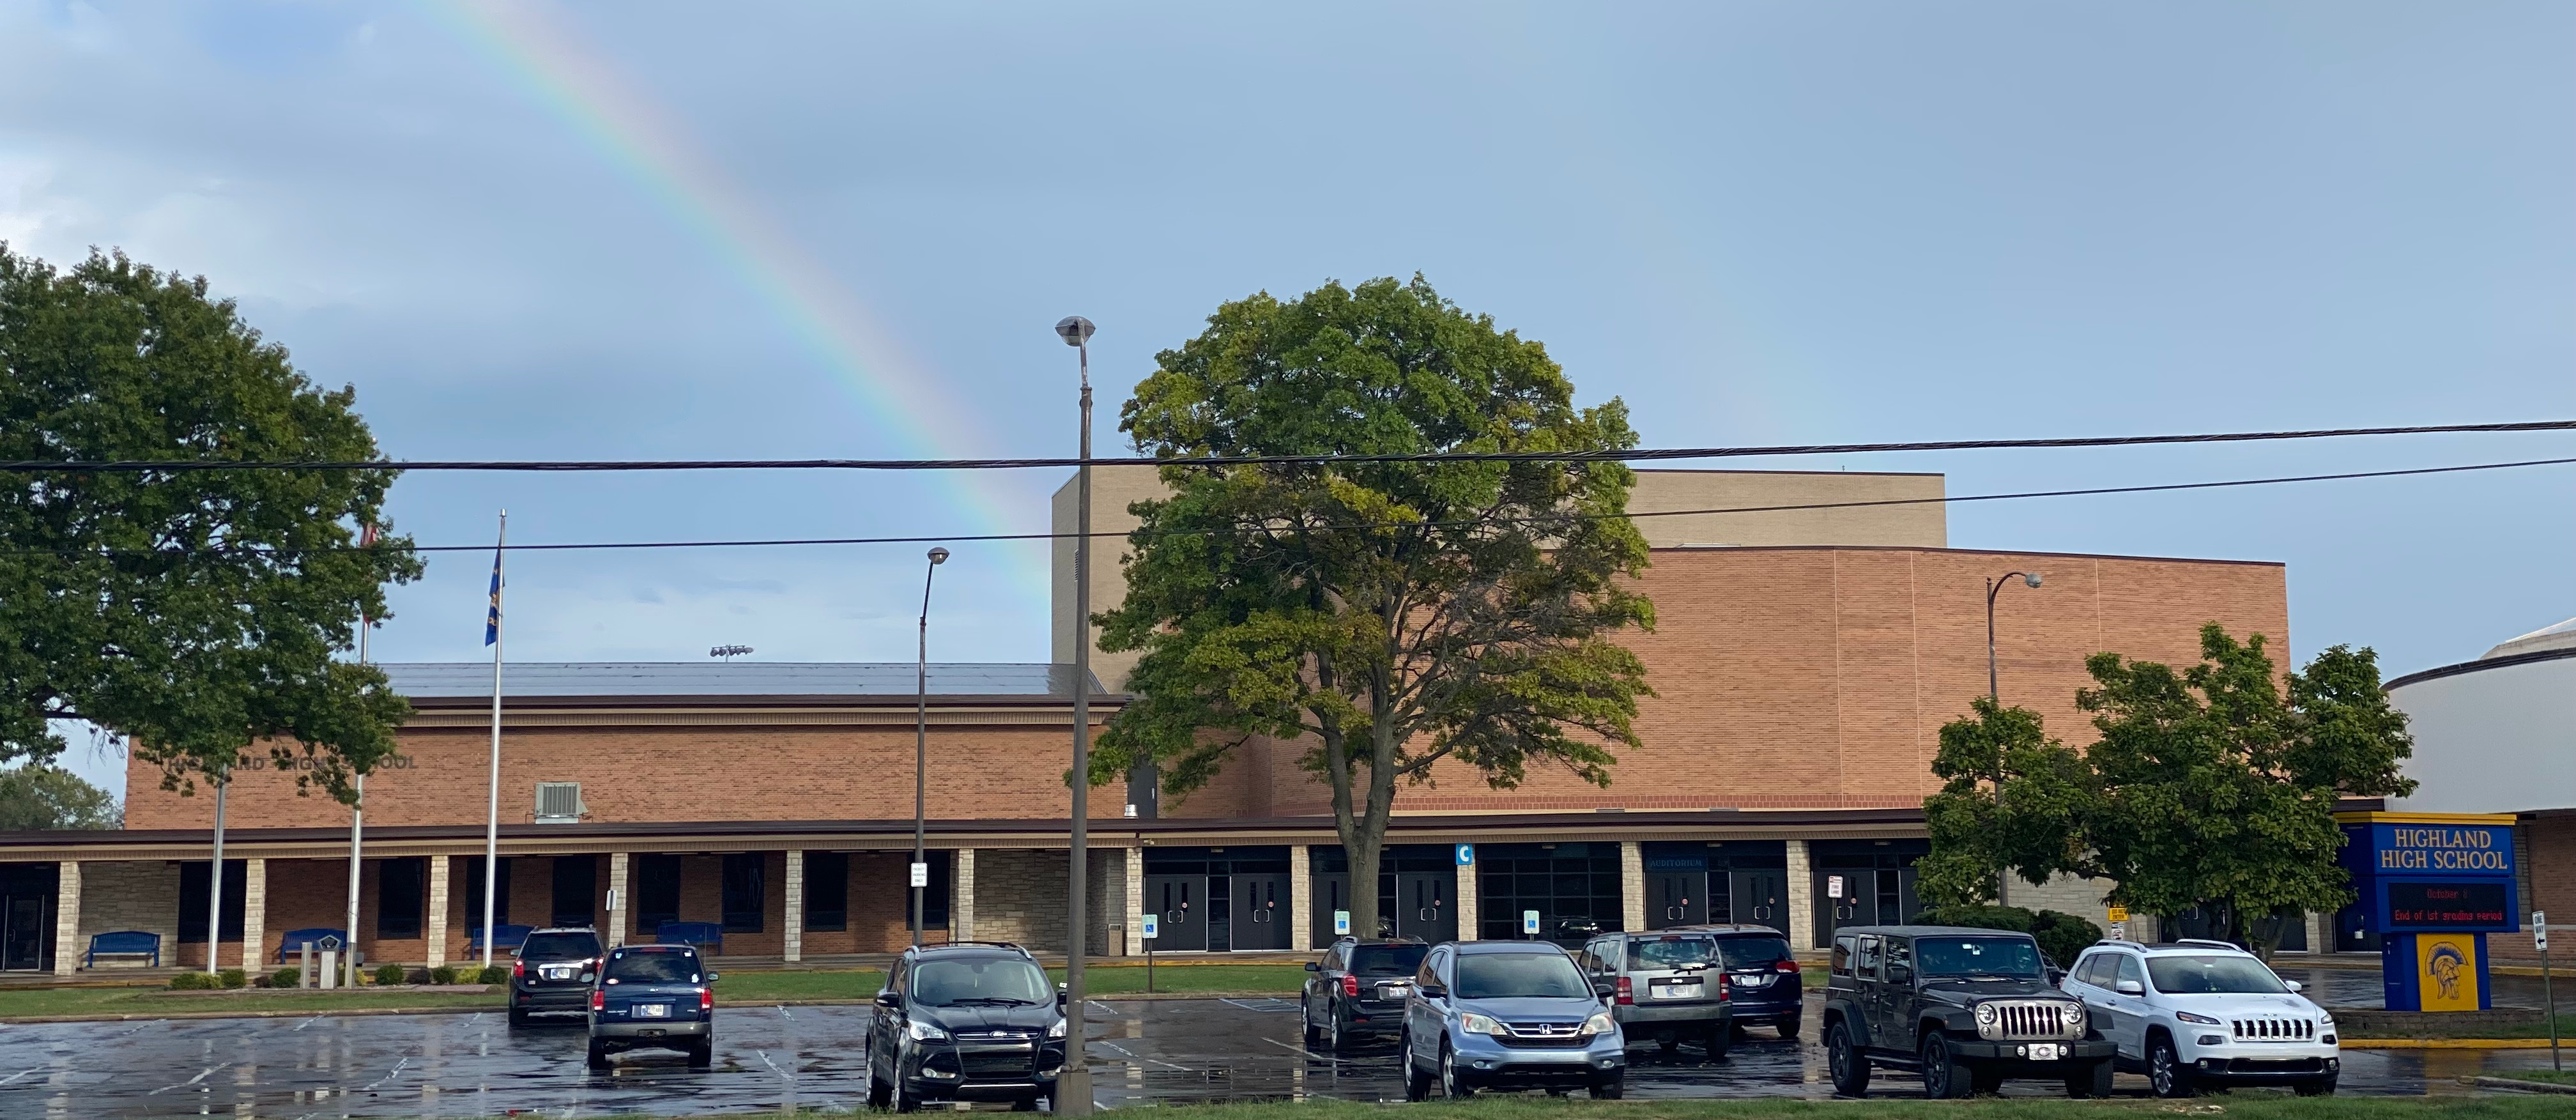 Photo of school with rainbow above it